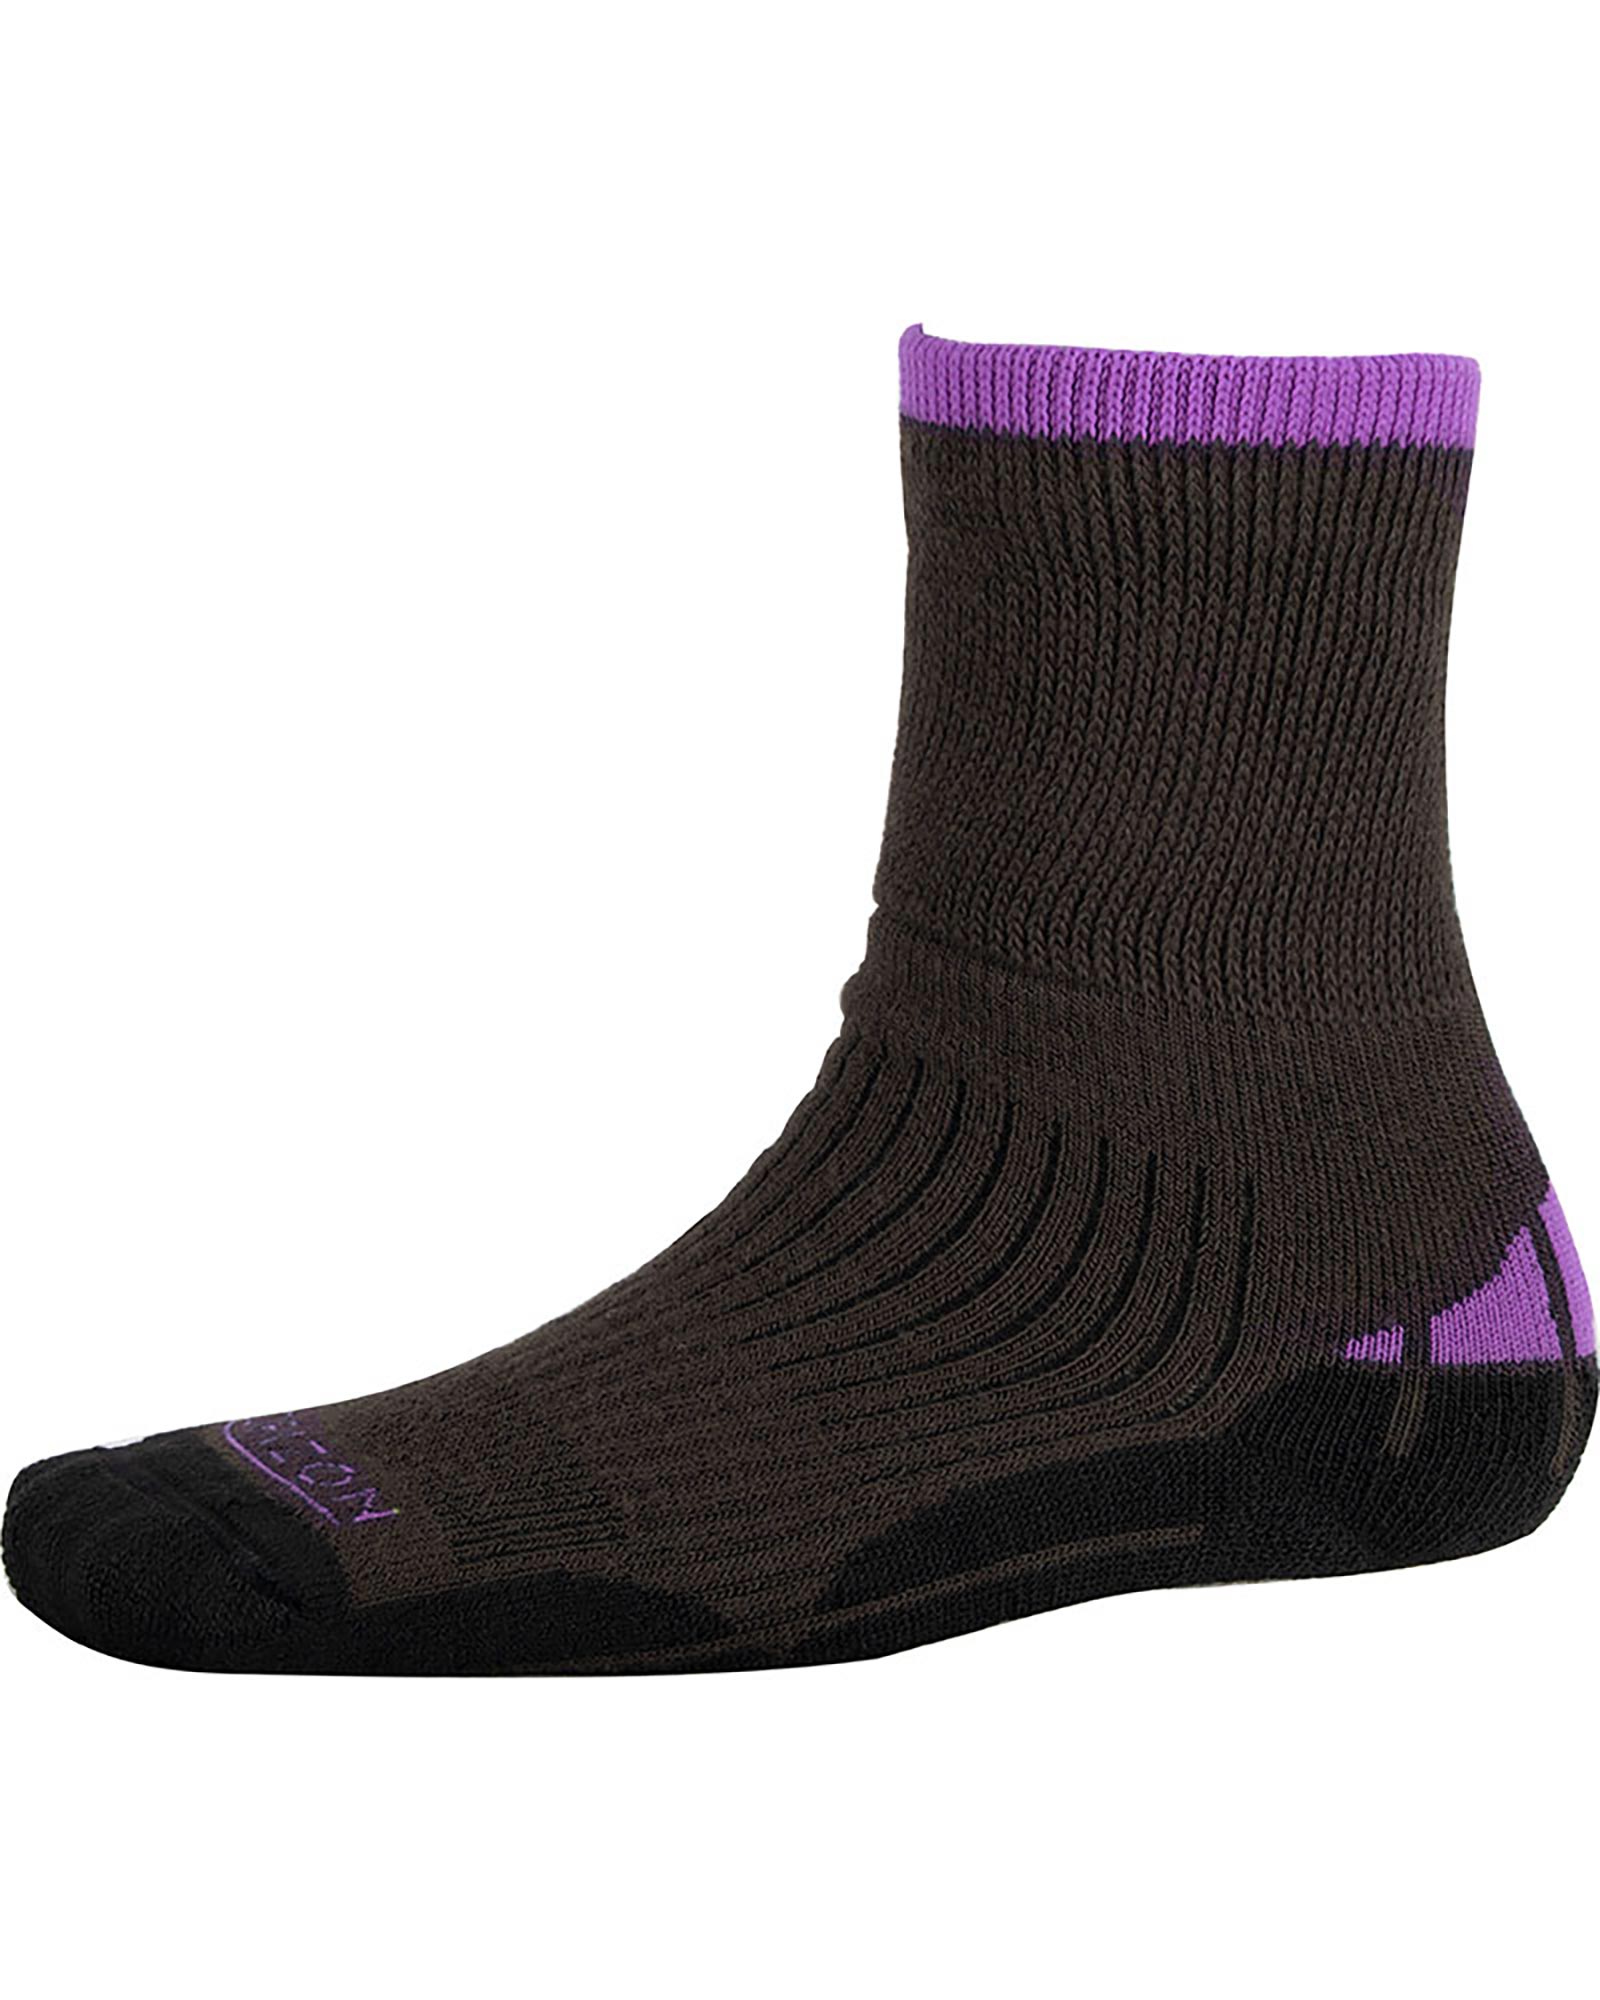 Ellis Brigham Hiker Coolmax Kids’ Socks - Charcoal/Violet XS